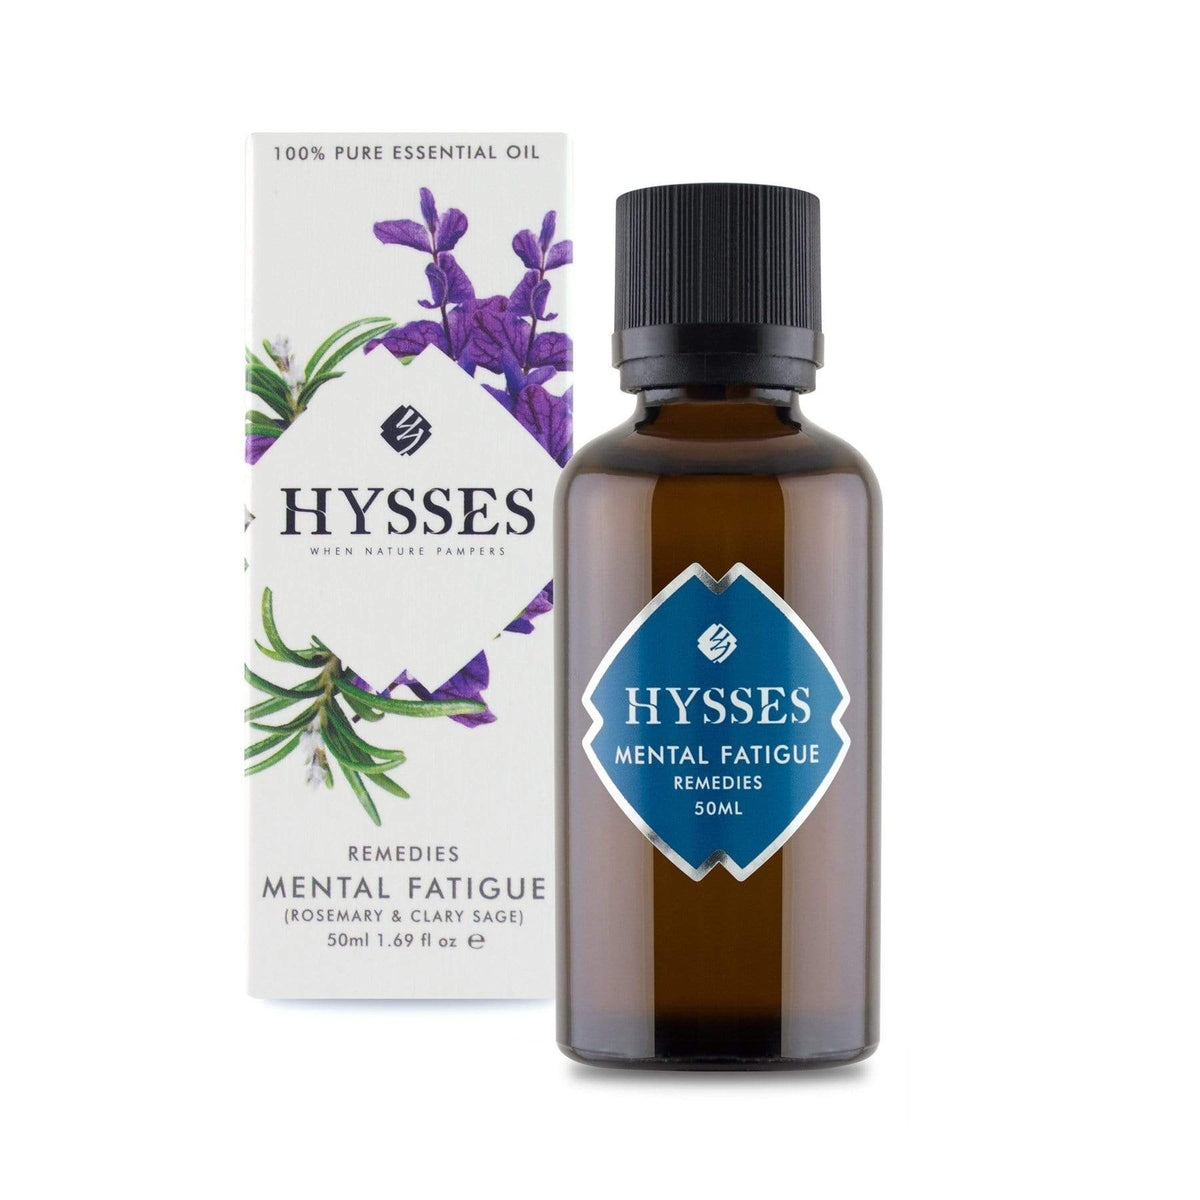 Hysses Essential Oil 50ml Remedies, Mental Fatigue